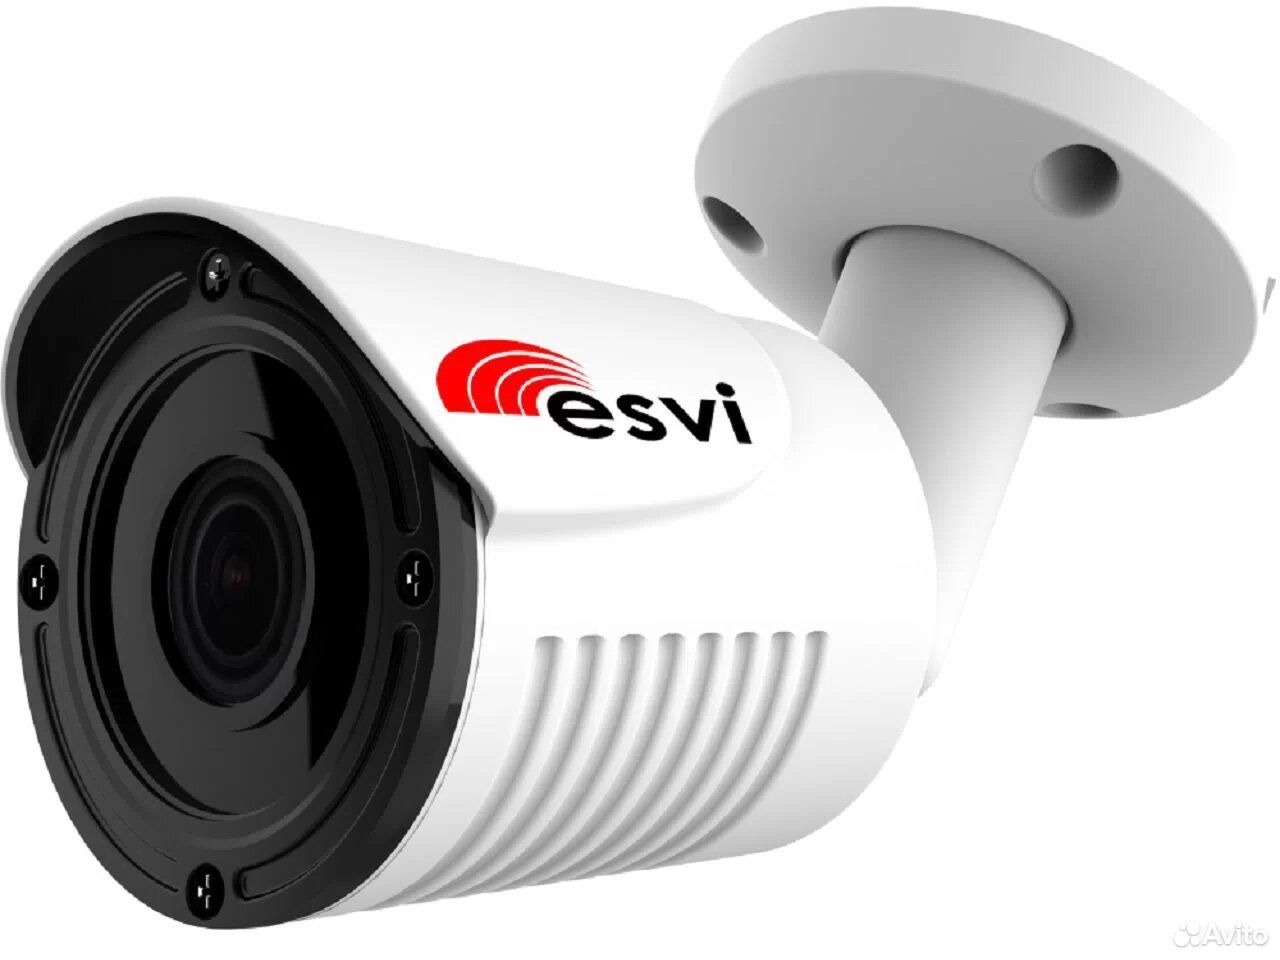 Видеокамеры 3 мп. Px-IP-bh30-f23-p BV уличная IP видеокамера 2.0МП F 2.8мм POE. ESVI EVC-bh30-sl20-p/c (BV) уличная IP видеокамера, 2.0МП, F=2.8мм, POE, SD. ESVI EVC-bh30-s20-p/c уличная IP видеокамера, 2.0МП, F=3.6мм, POE, SD. ESVI EVC-bh30-f22-p (BV) уличная IP видеокамера, 2.0МП, F=2.8мм, POE.